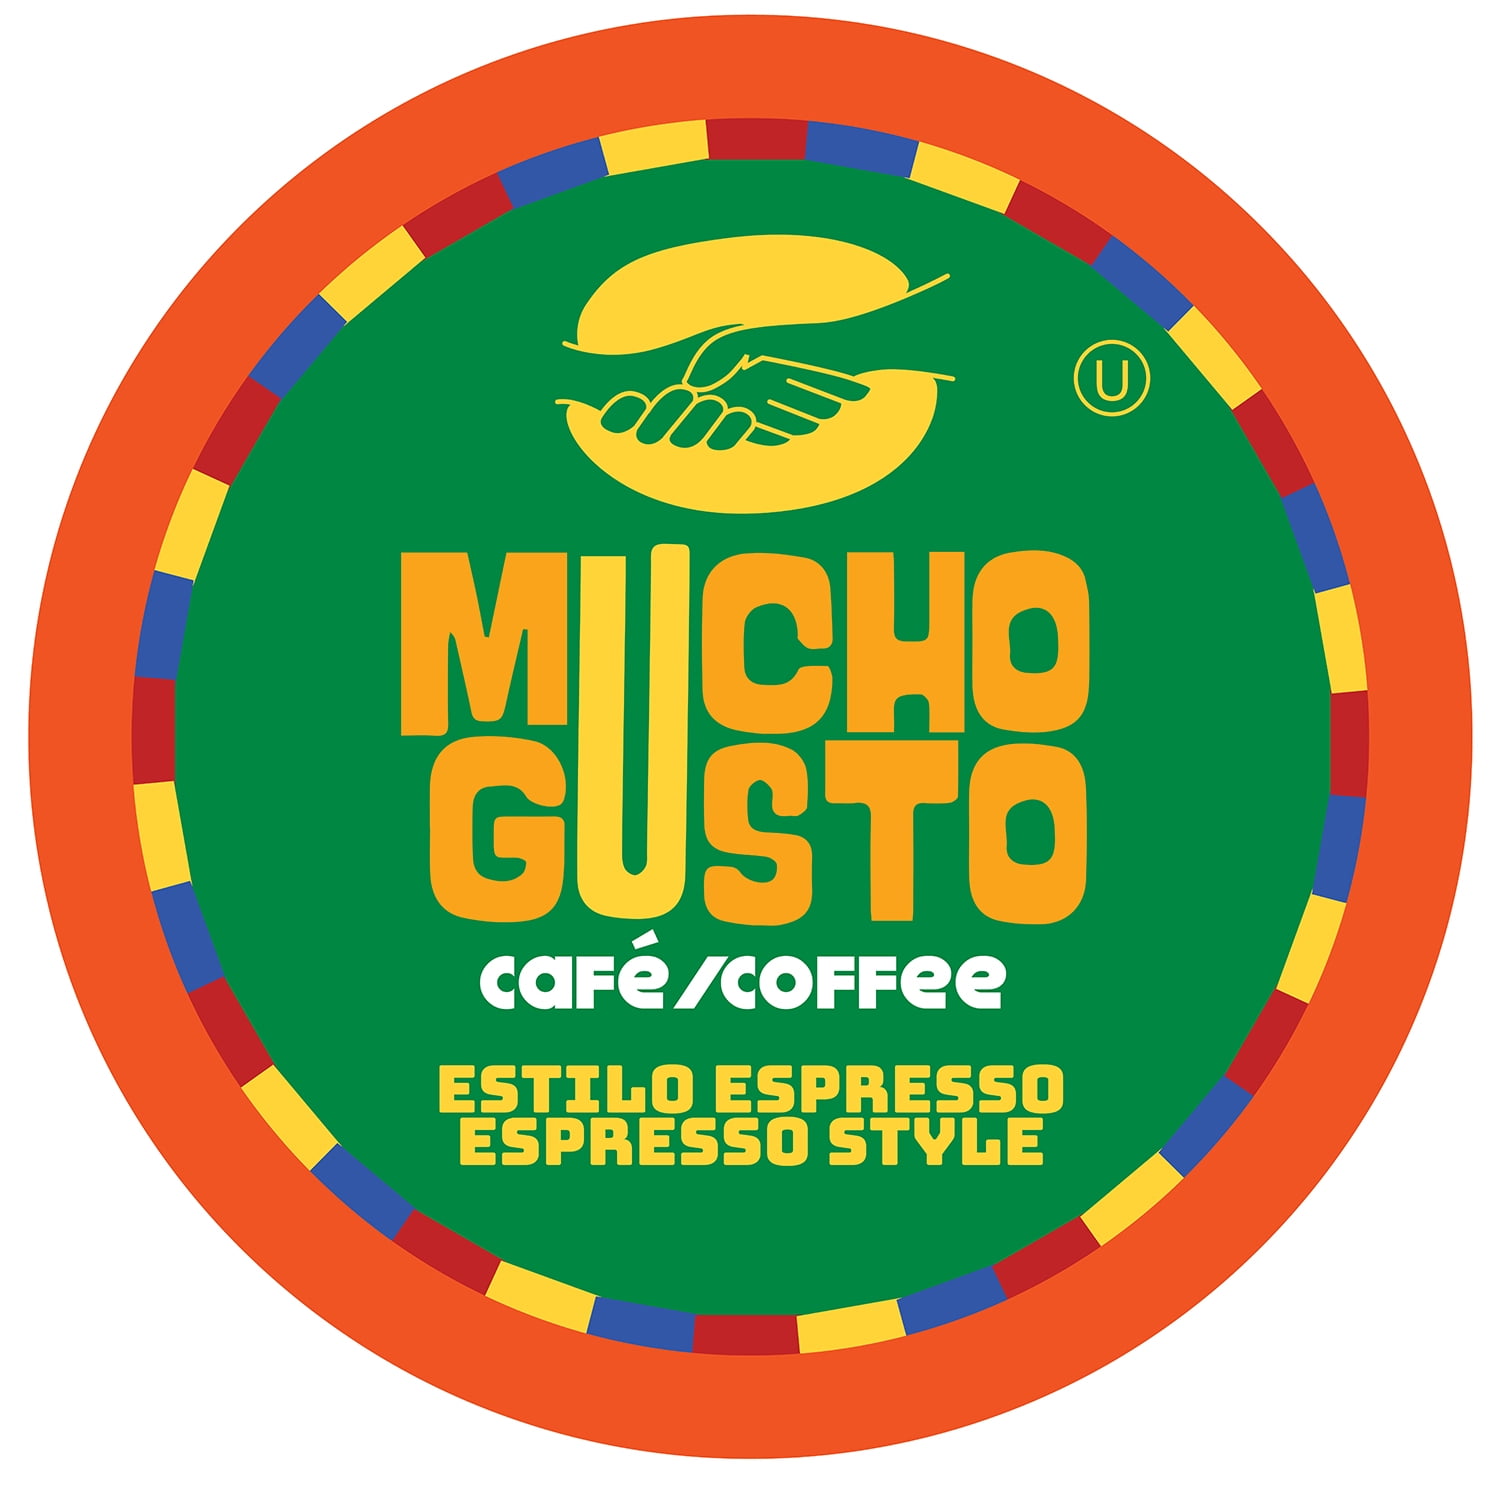 Lavazza Espresso Italiano Coffee Keurig K-Cup Pods 40ct